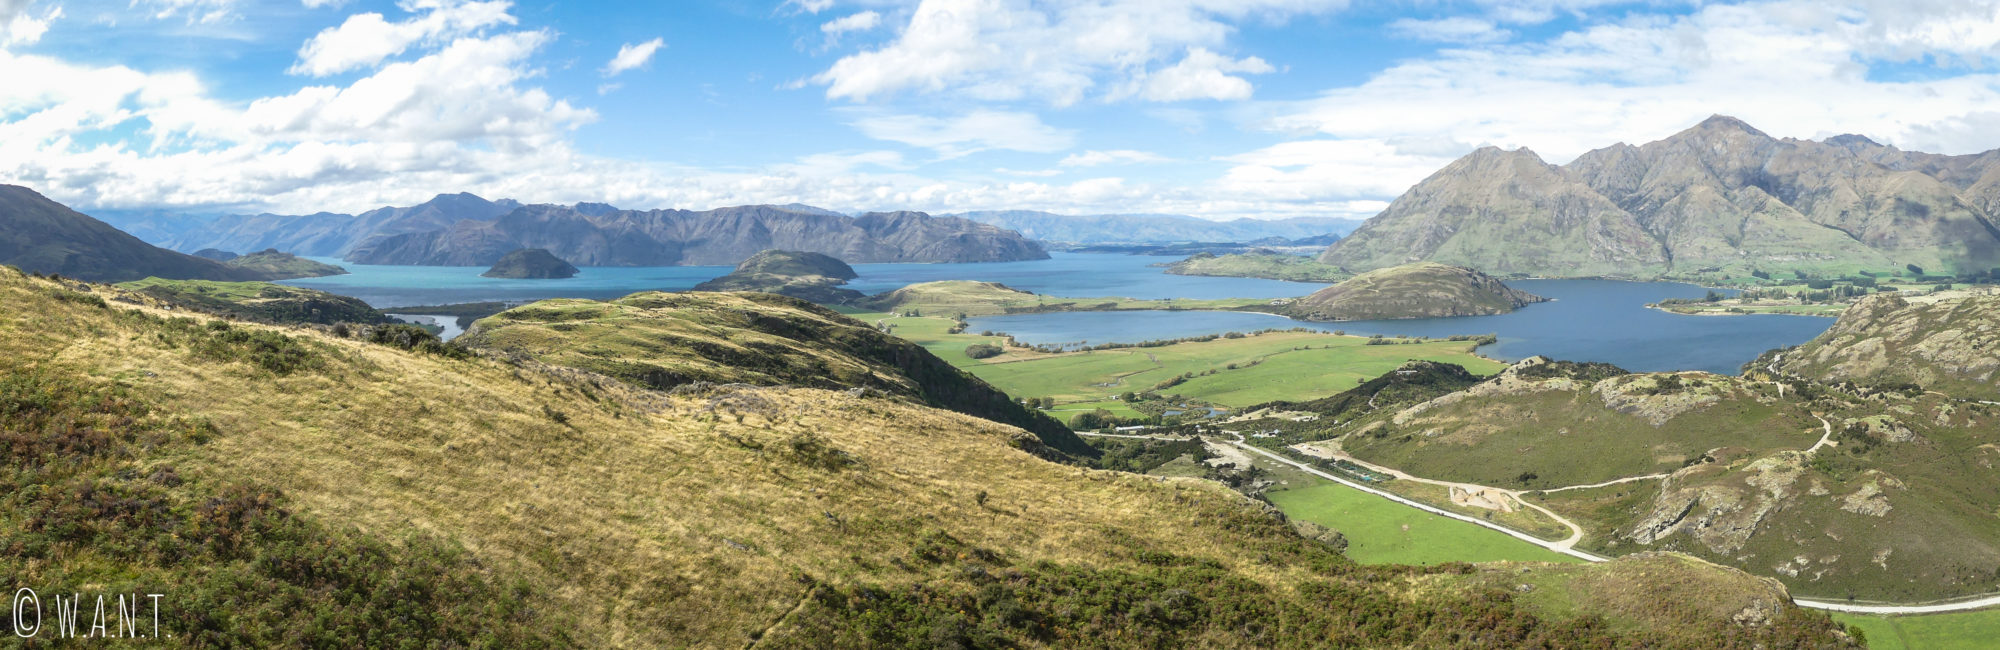 Panorama depuis la randonnée Diamond Lake près de Wanaka en Nouvelle-Zélande